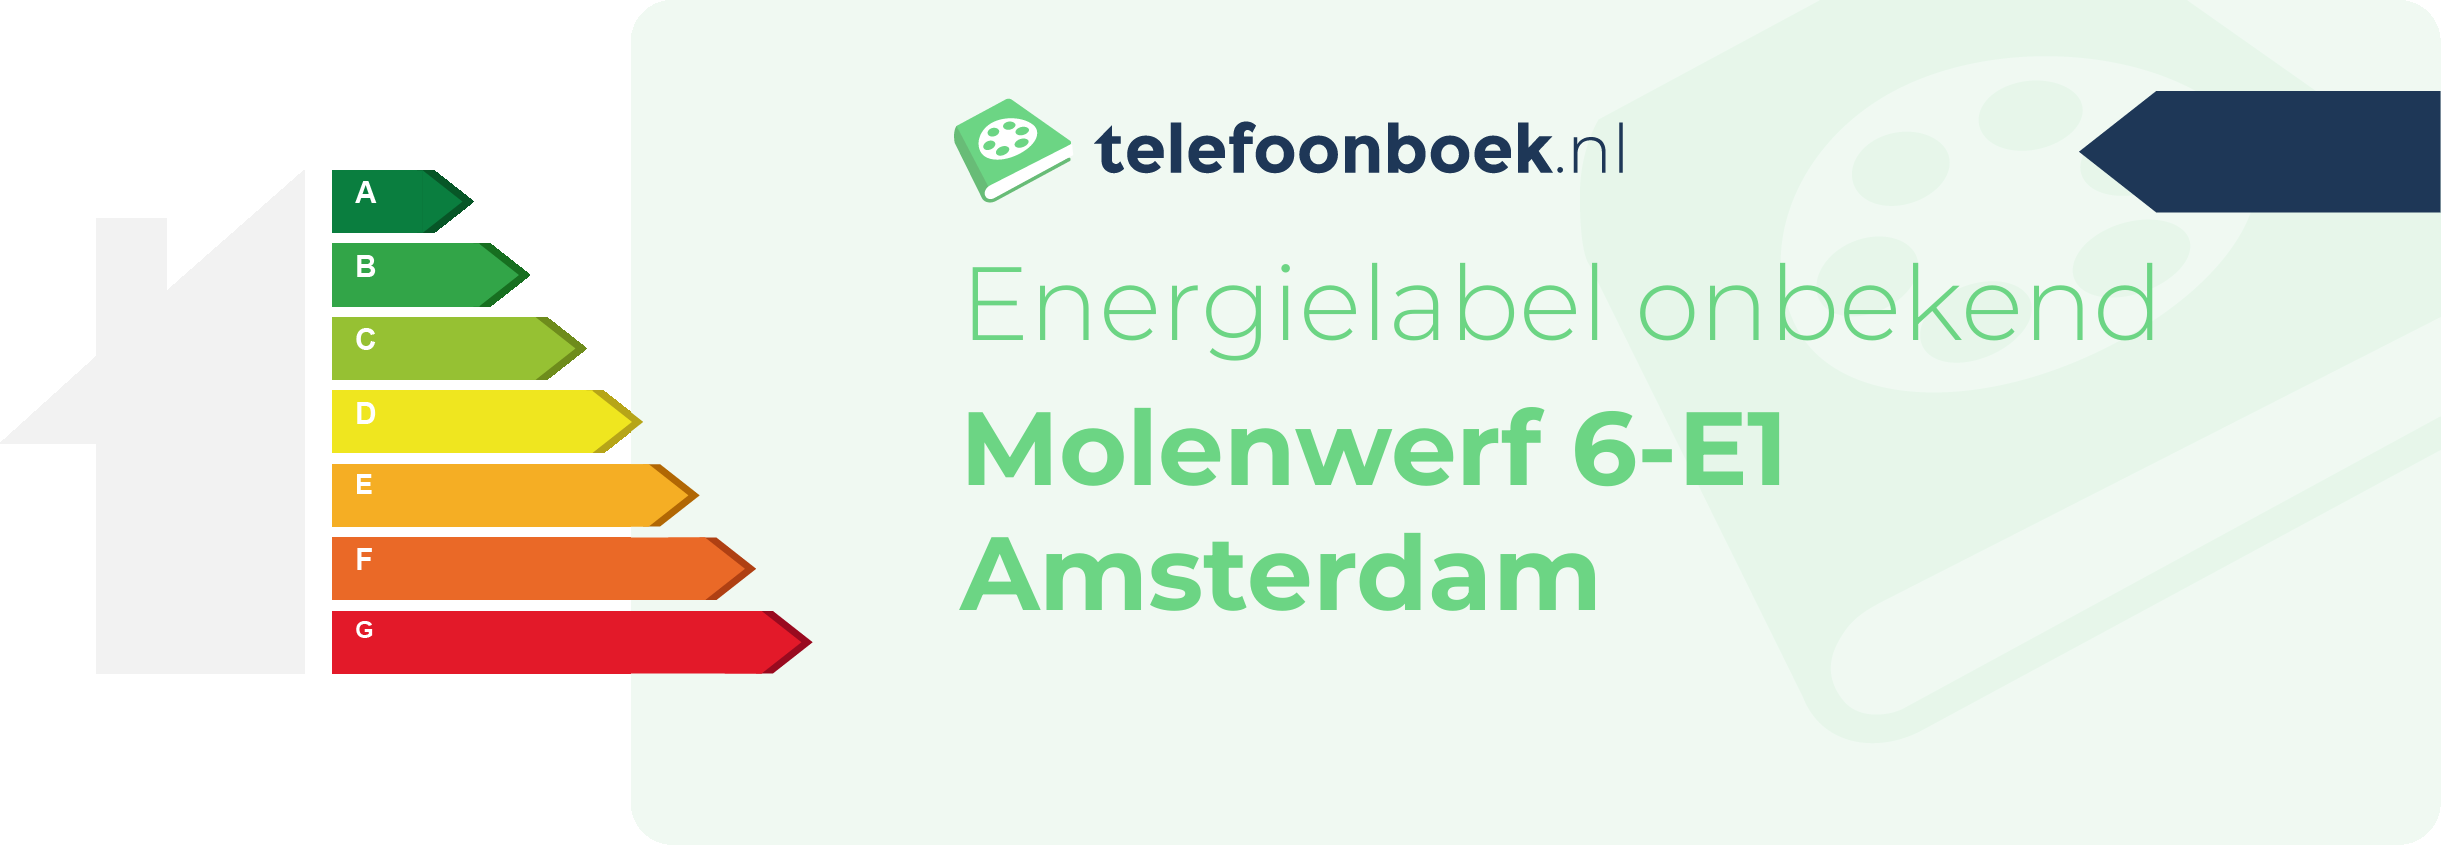 Energielabel Molenwerf 6-E1 Amsterdam